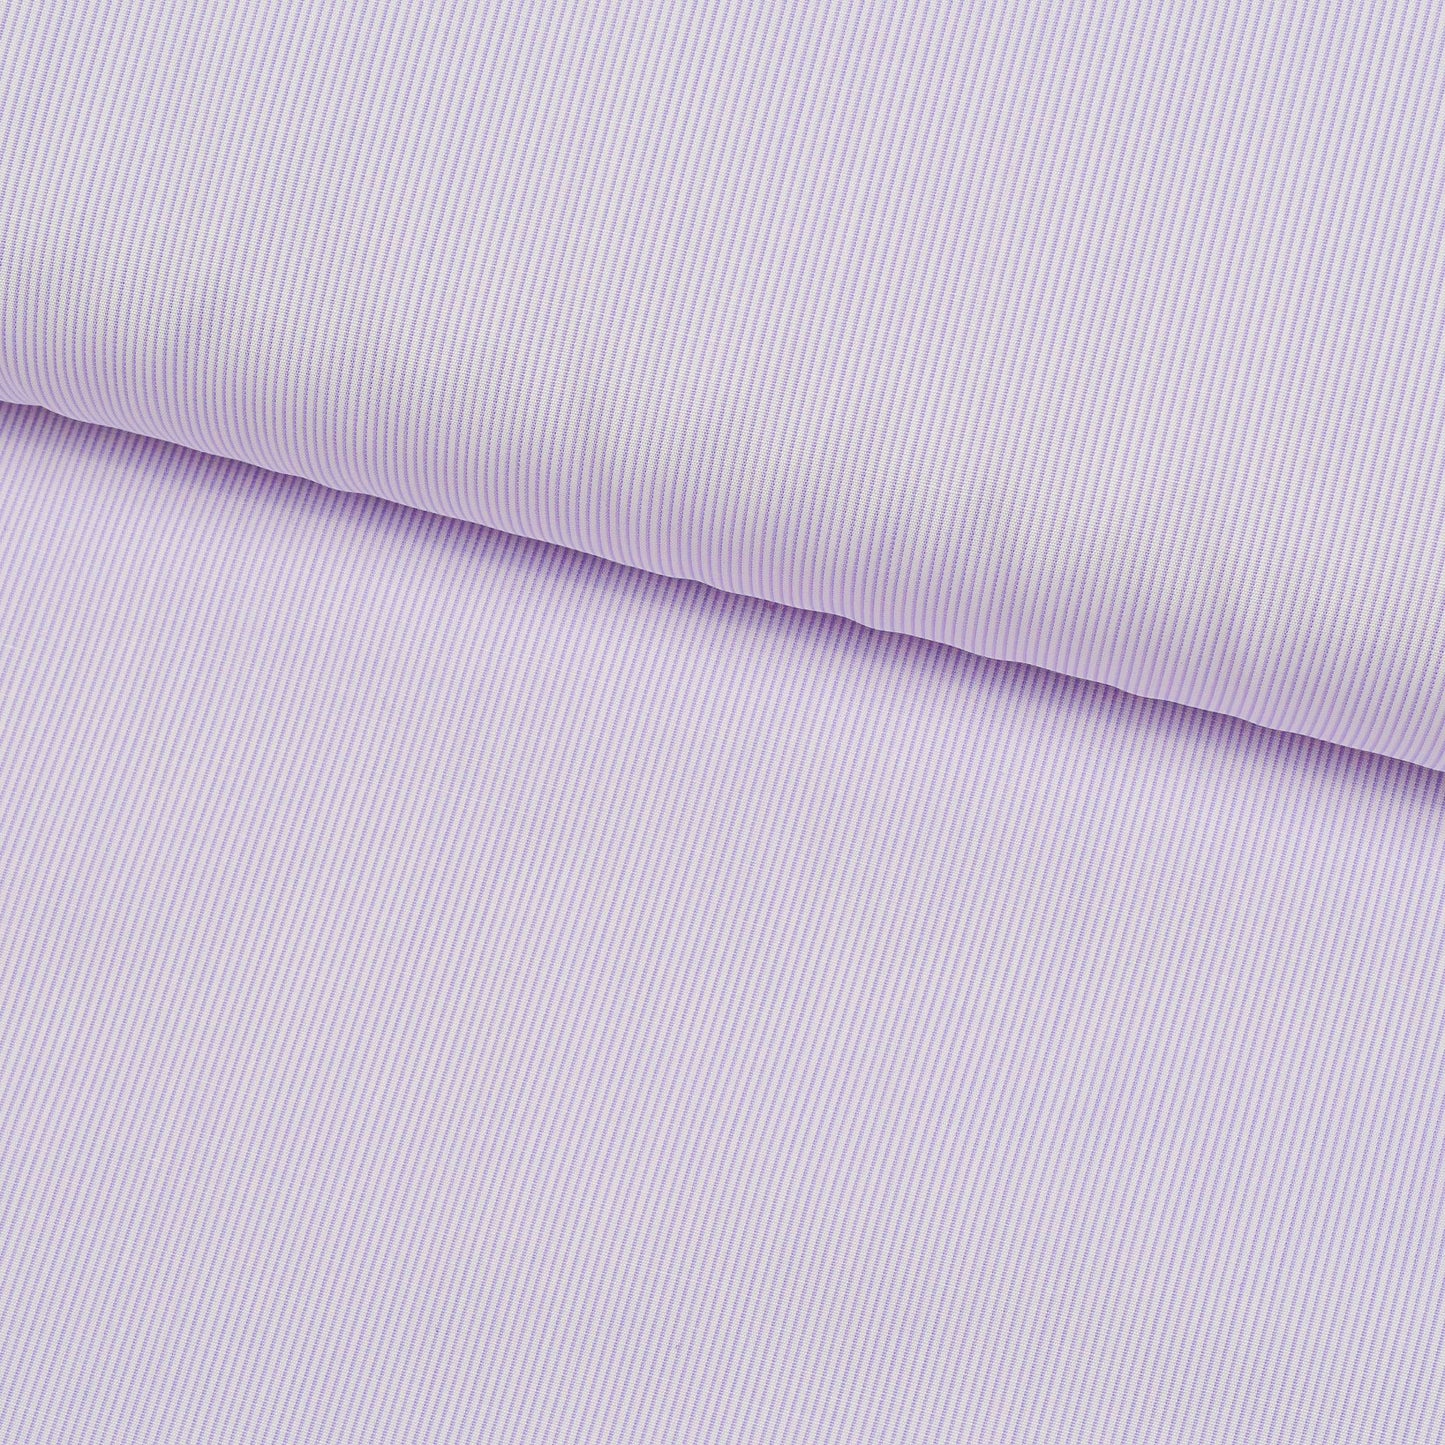 Boeing Fine Stripe Pale Violet Poplin Cotton Shirt